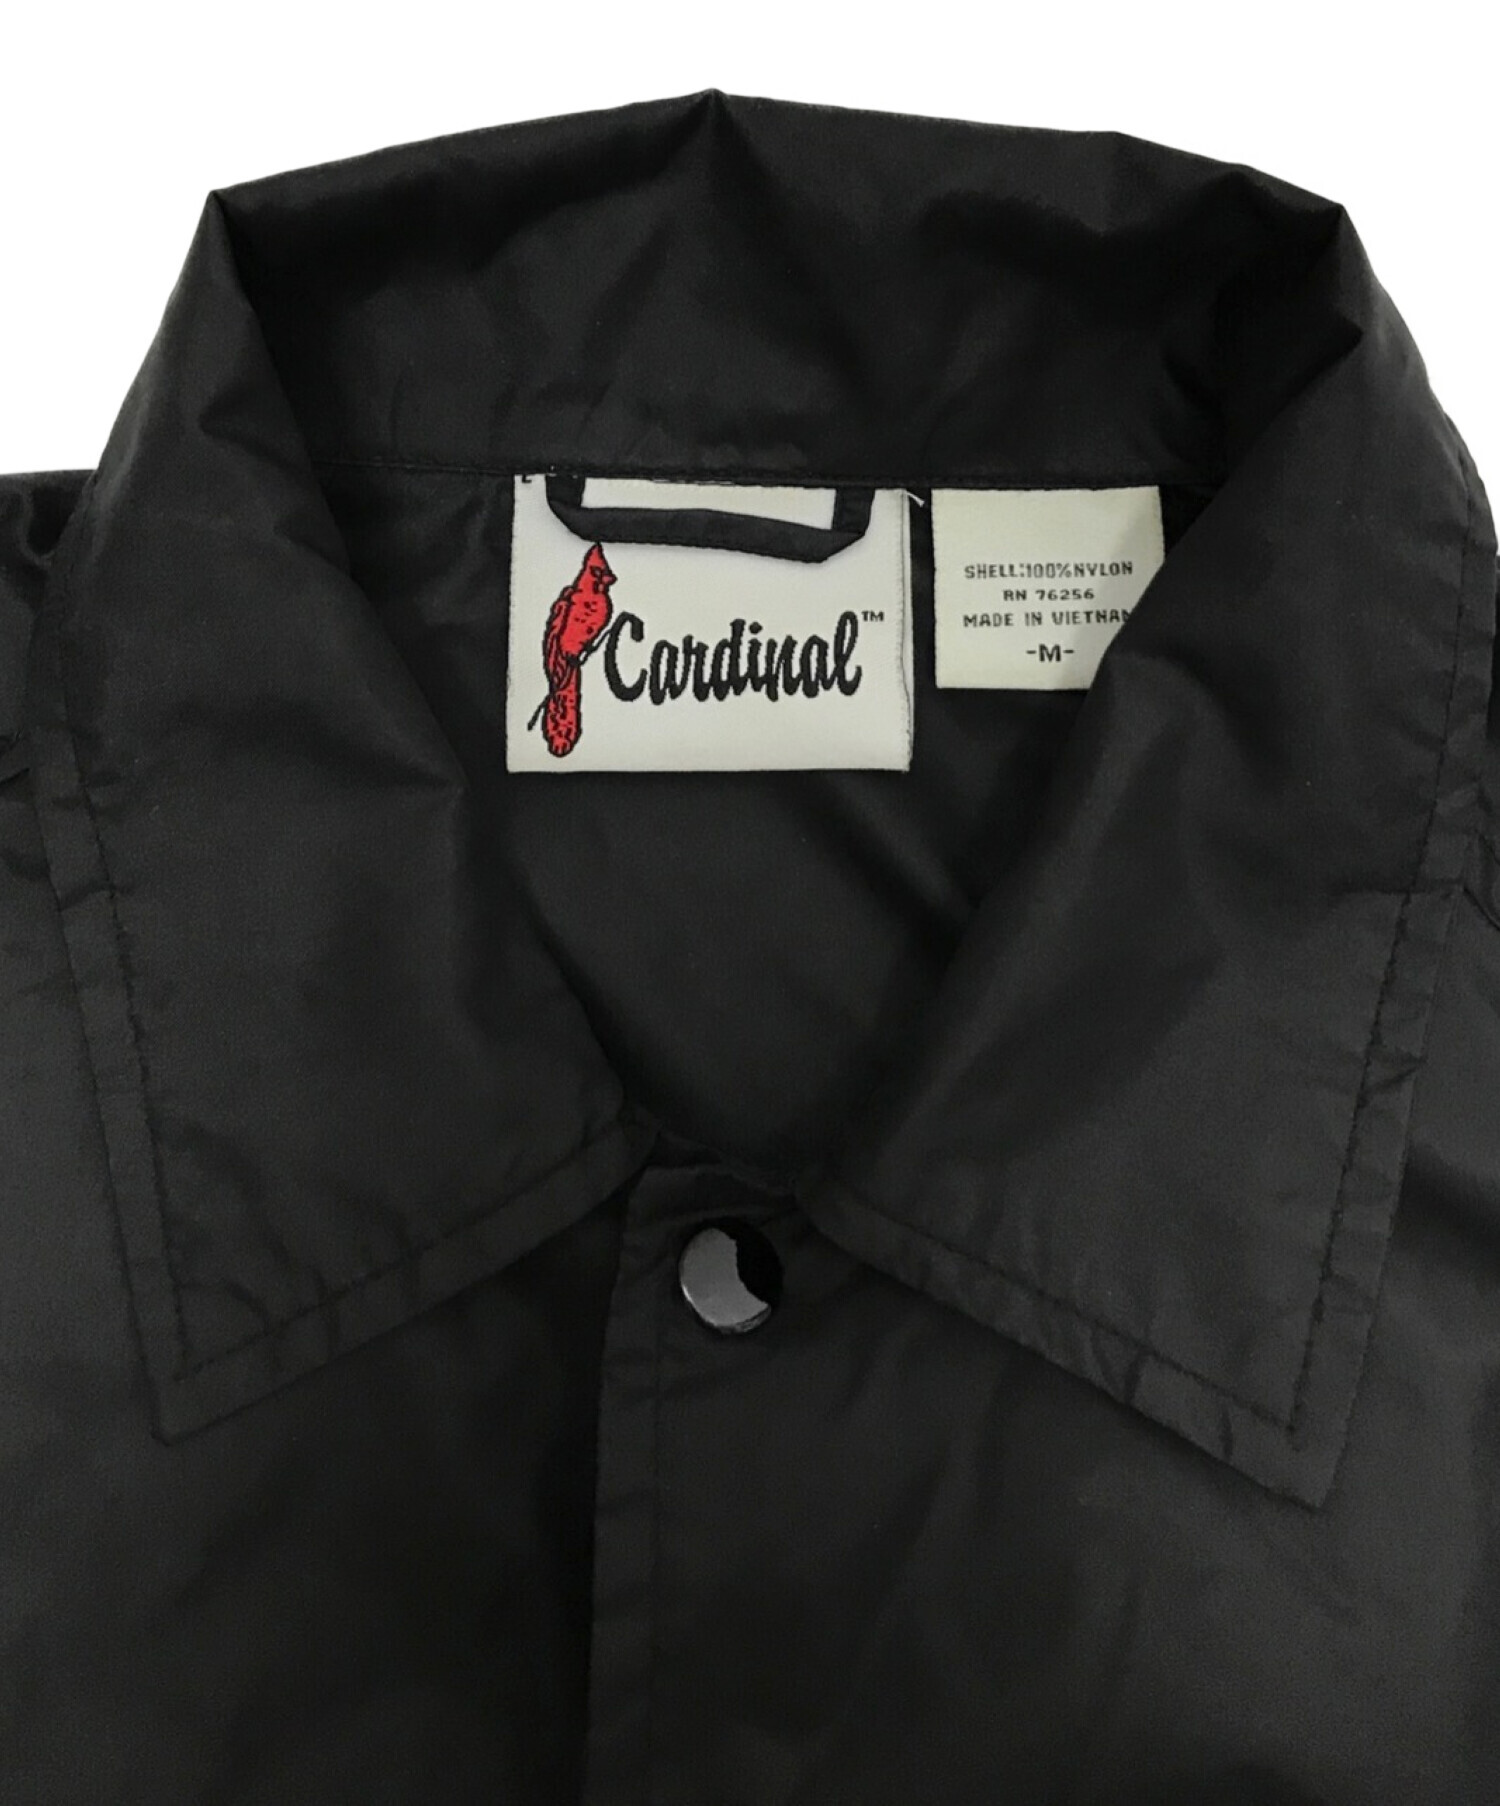 FreshService (フレッシュサービス) Corporate Coach Jacket ブラック サイズ:M